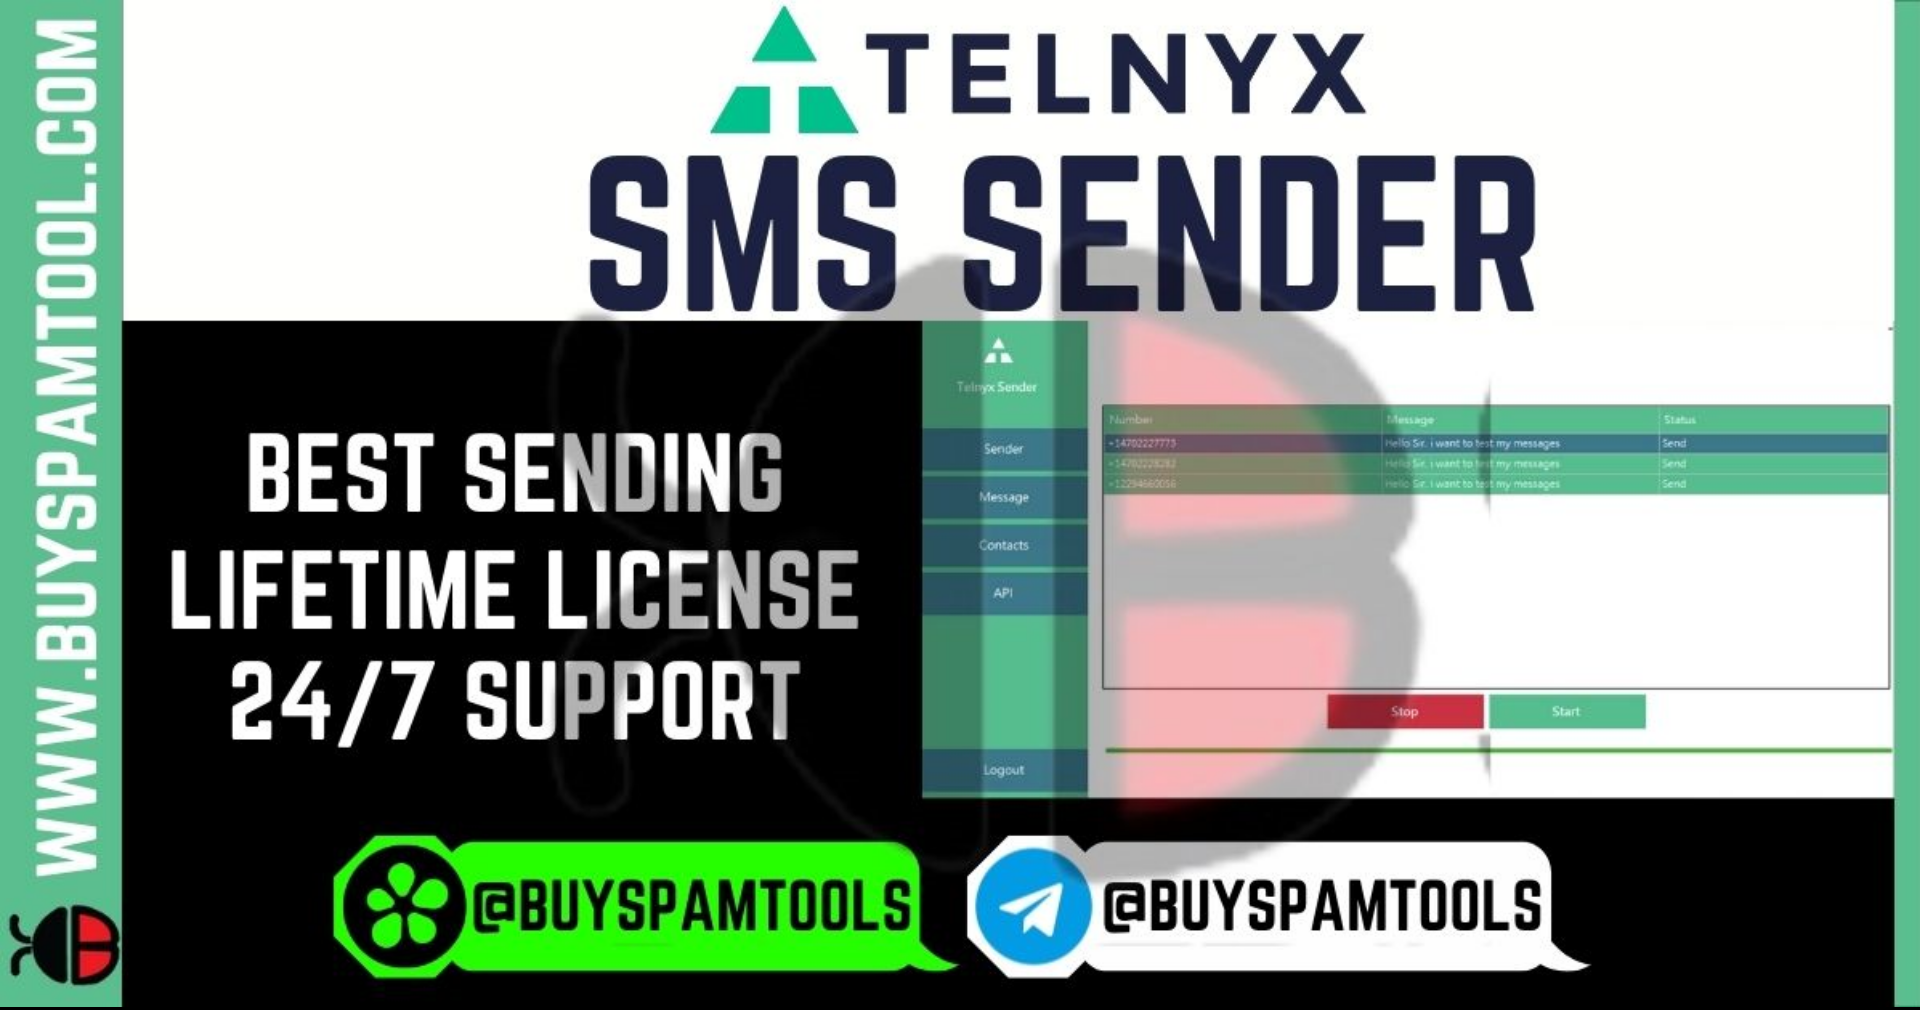 Telnyx SMS Sender | SMS Spamming Tool | Buy Spam Tool